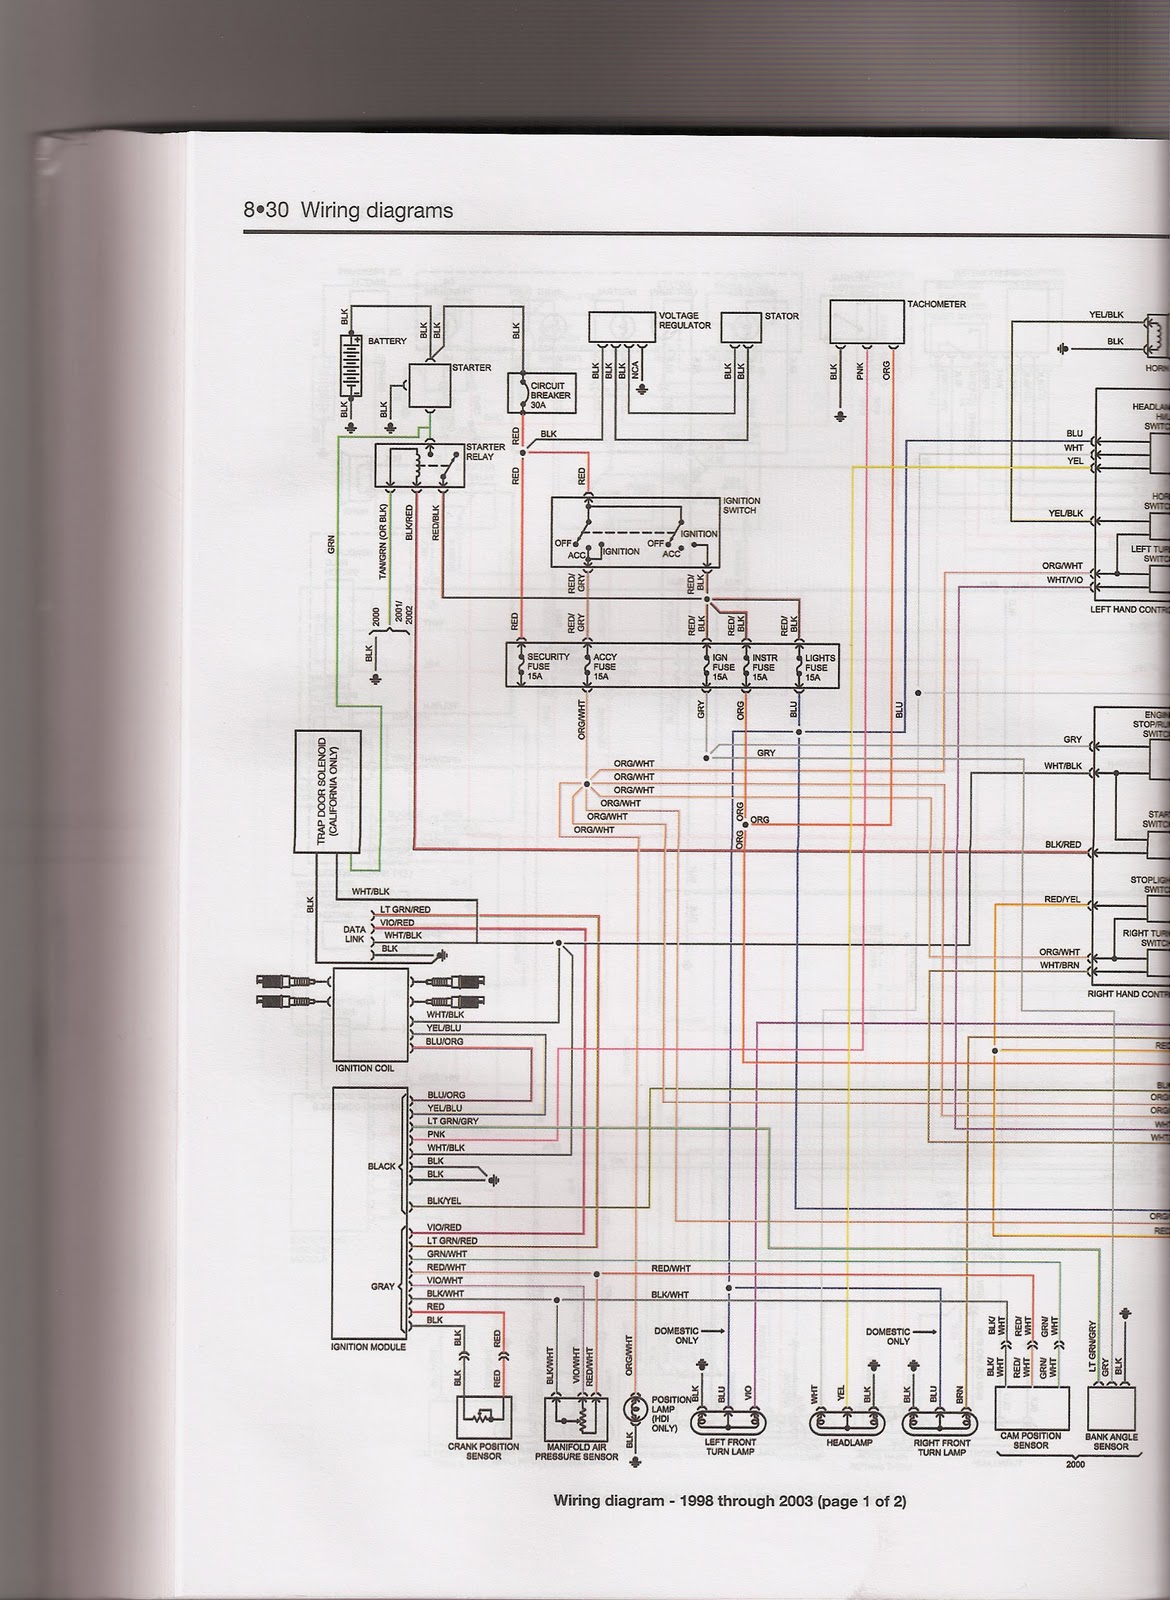 Kracker Jacks: Wiring diagrams for a 98-03 Sportster.